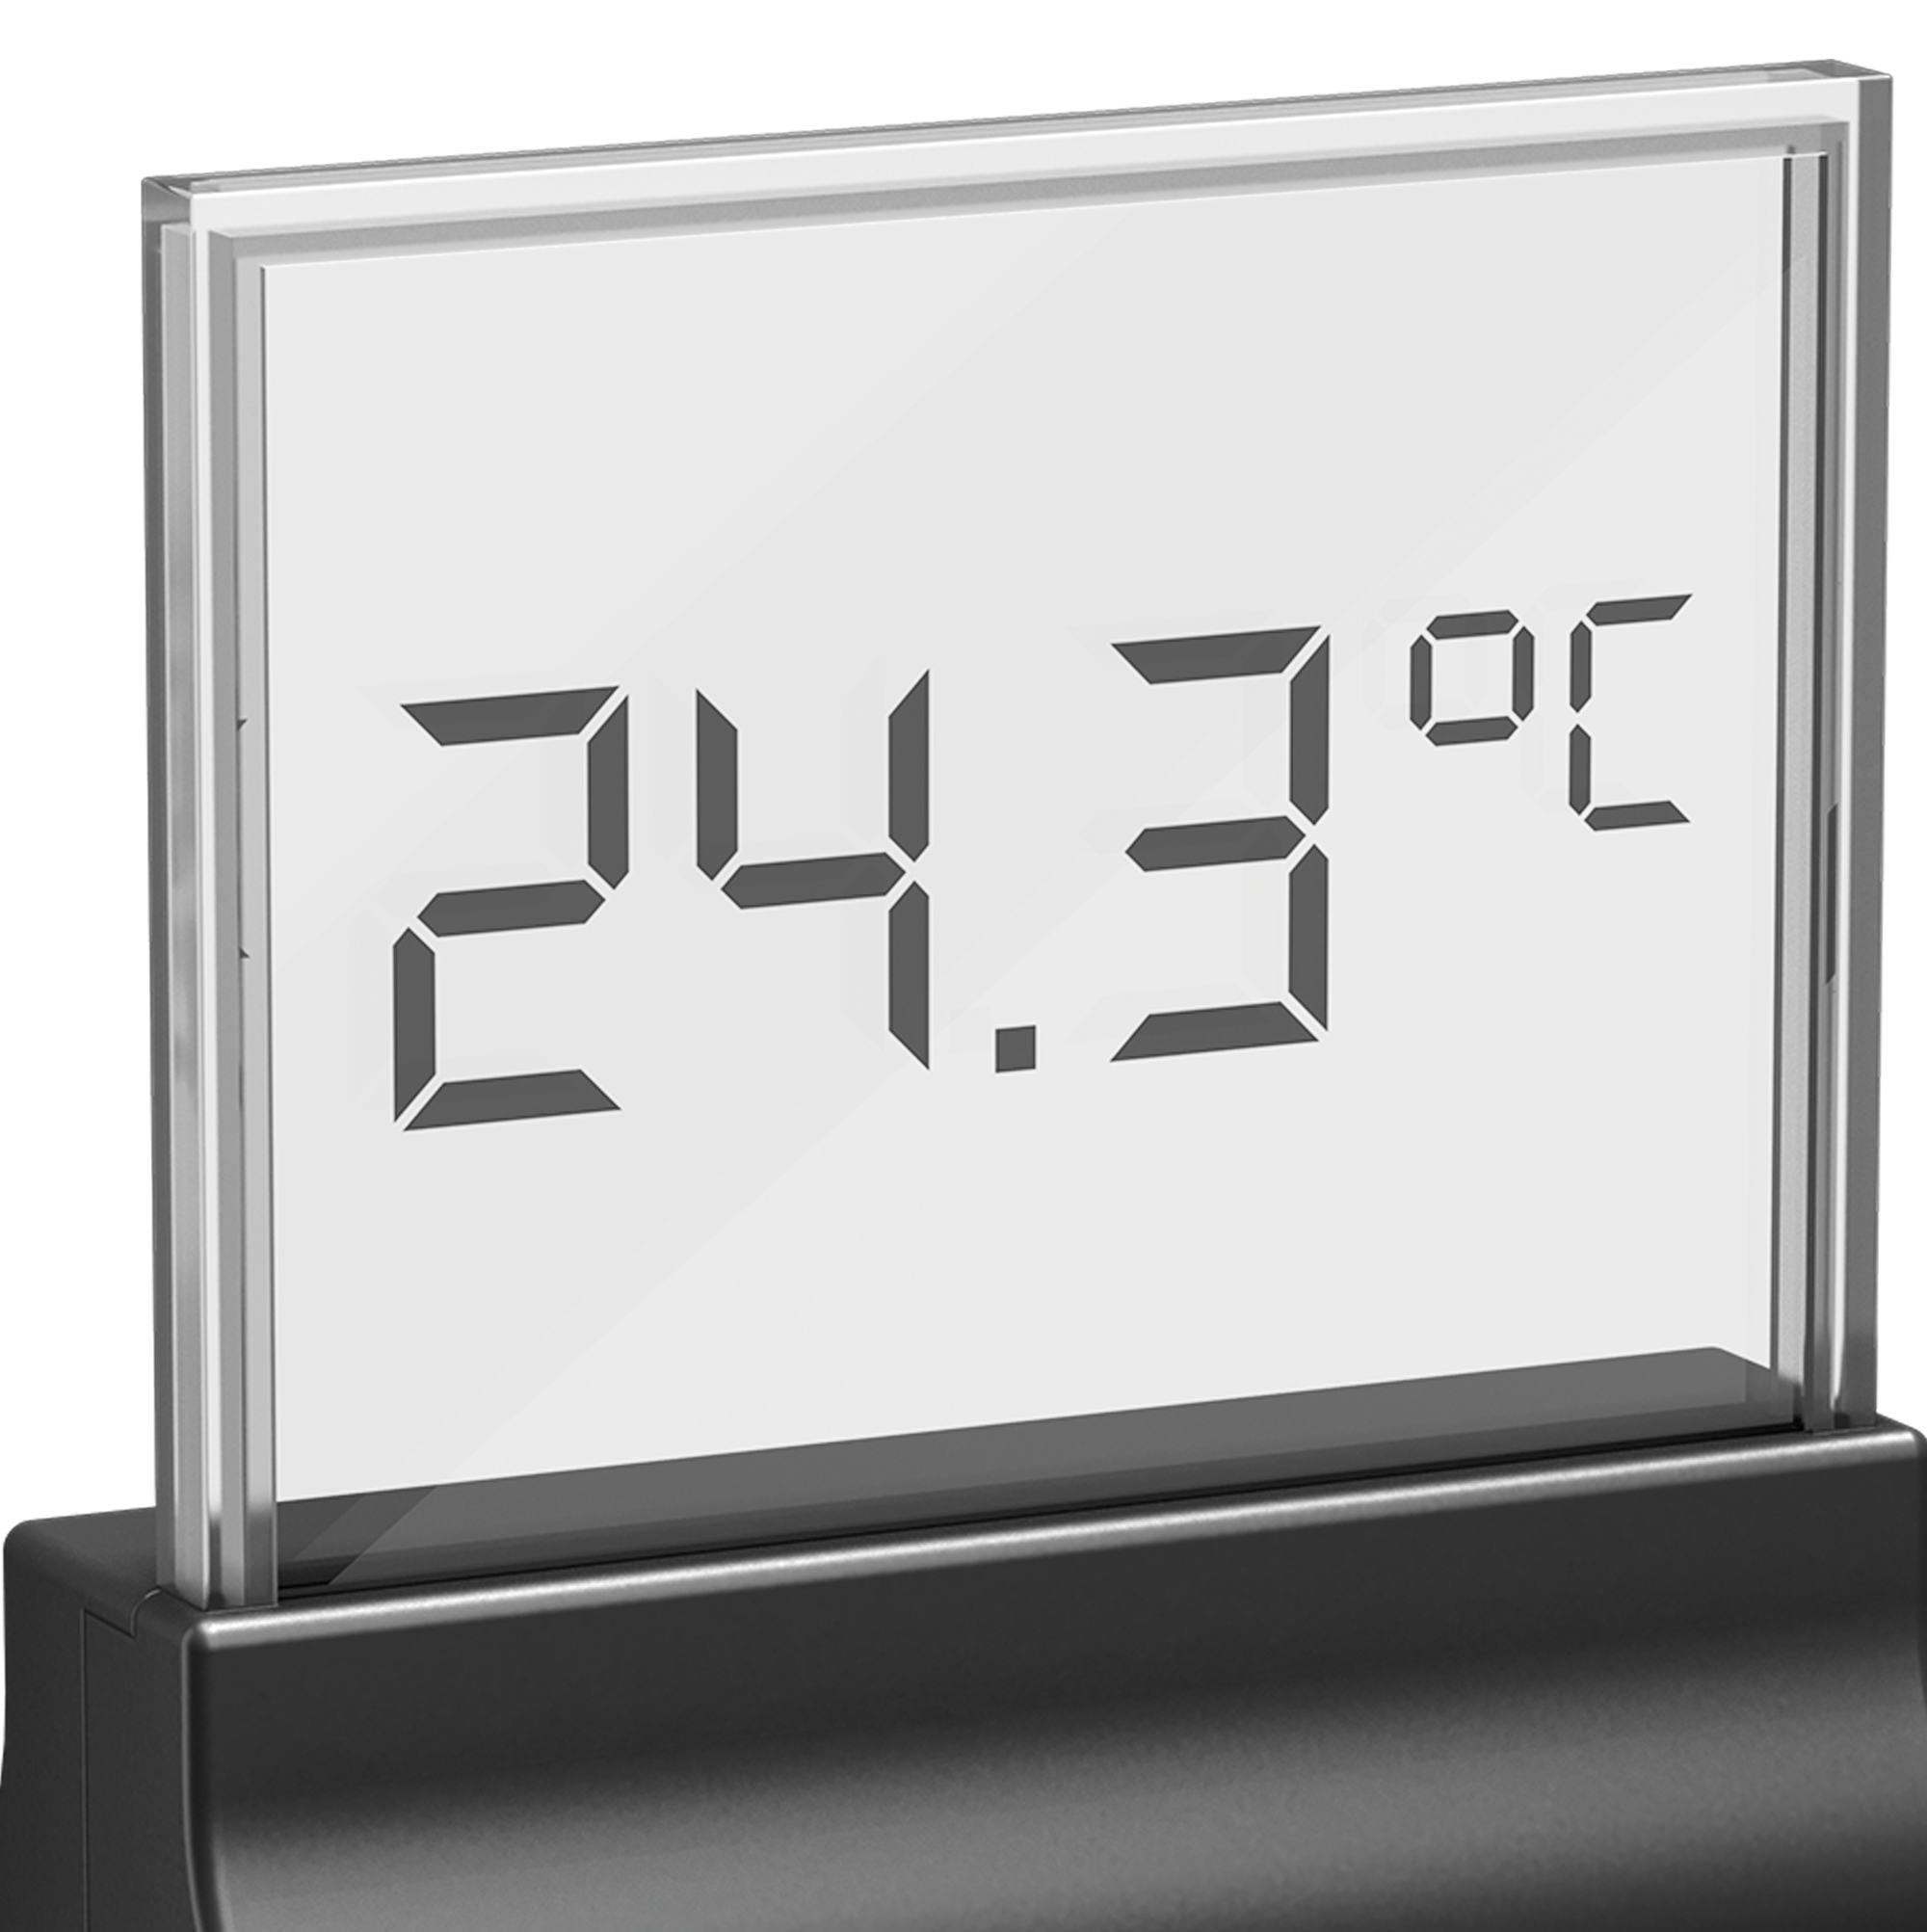 Miniatuur hulp in de huishouding kalender Digital Thermometer 3.0 | JUWEL Aquarium